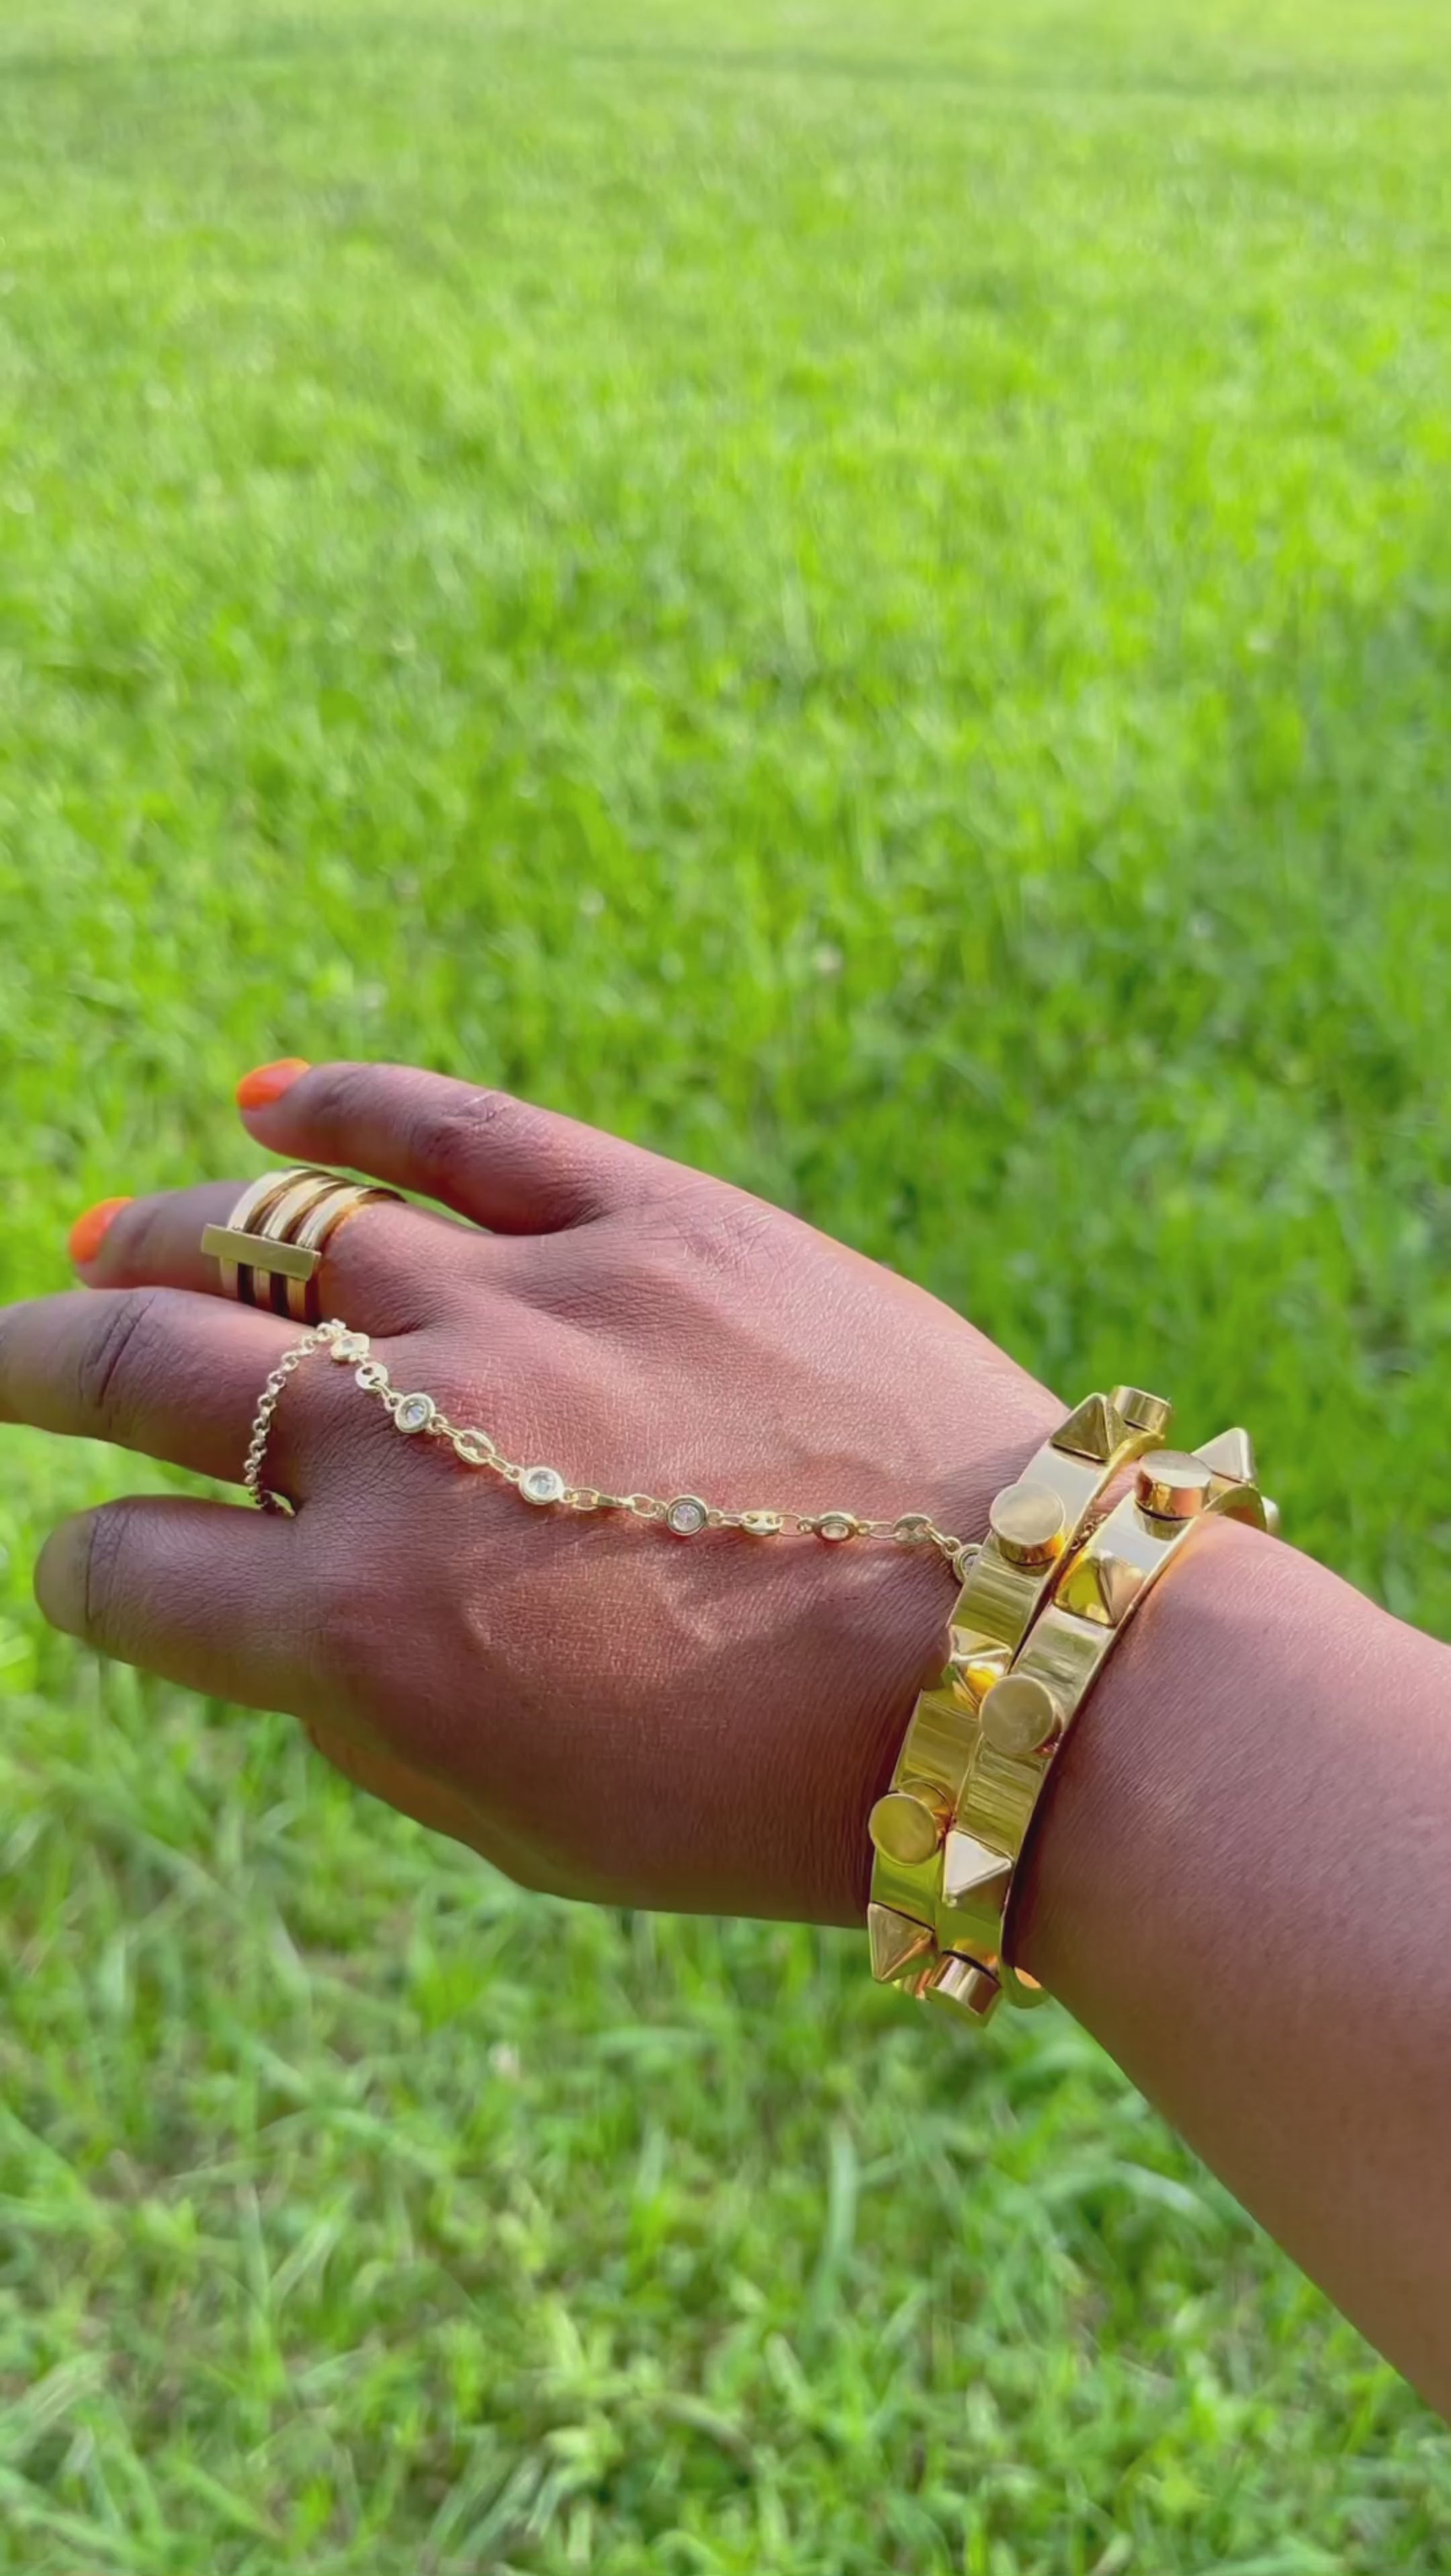 PORTIA ALEXANDER designer gold hand chain.